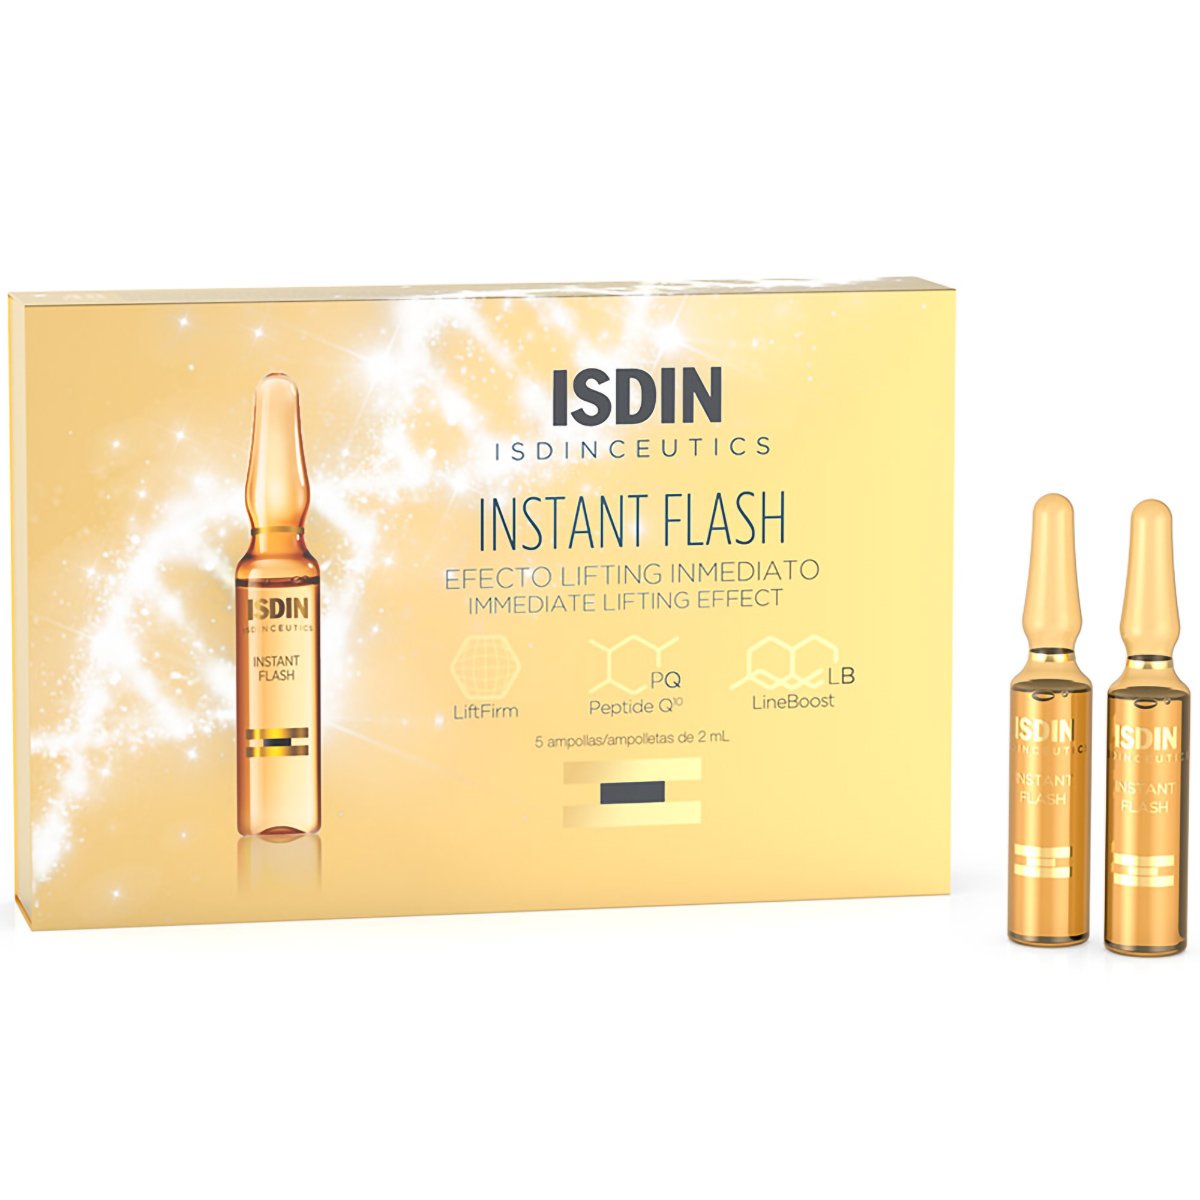 ISDIN Instant Flash 2ml x 1 Ampolla